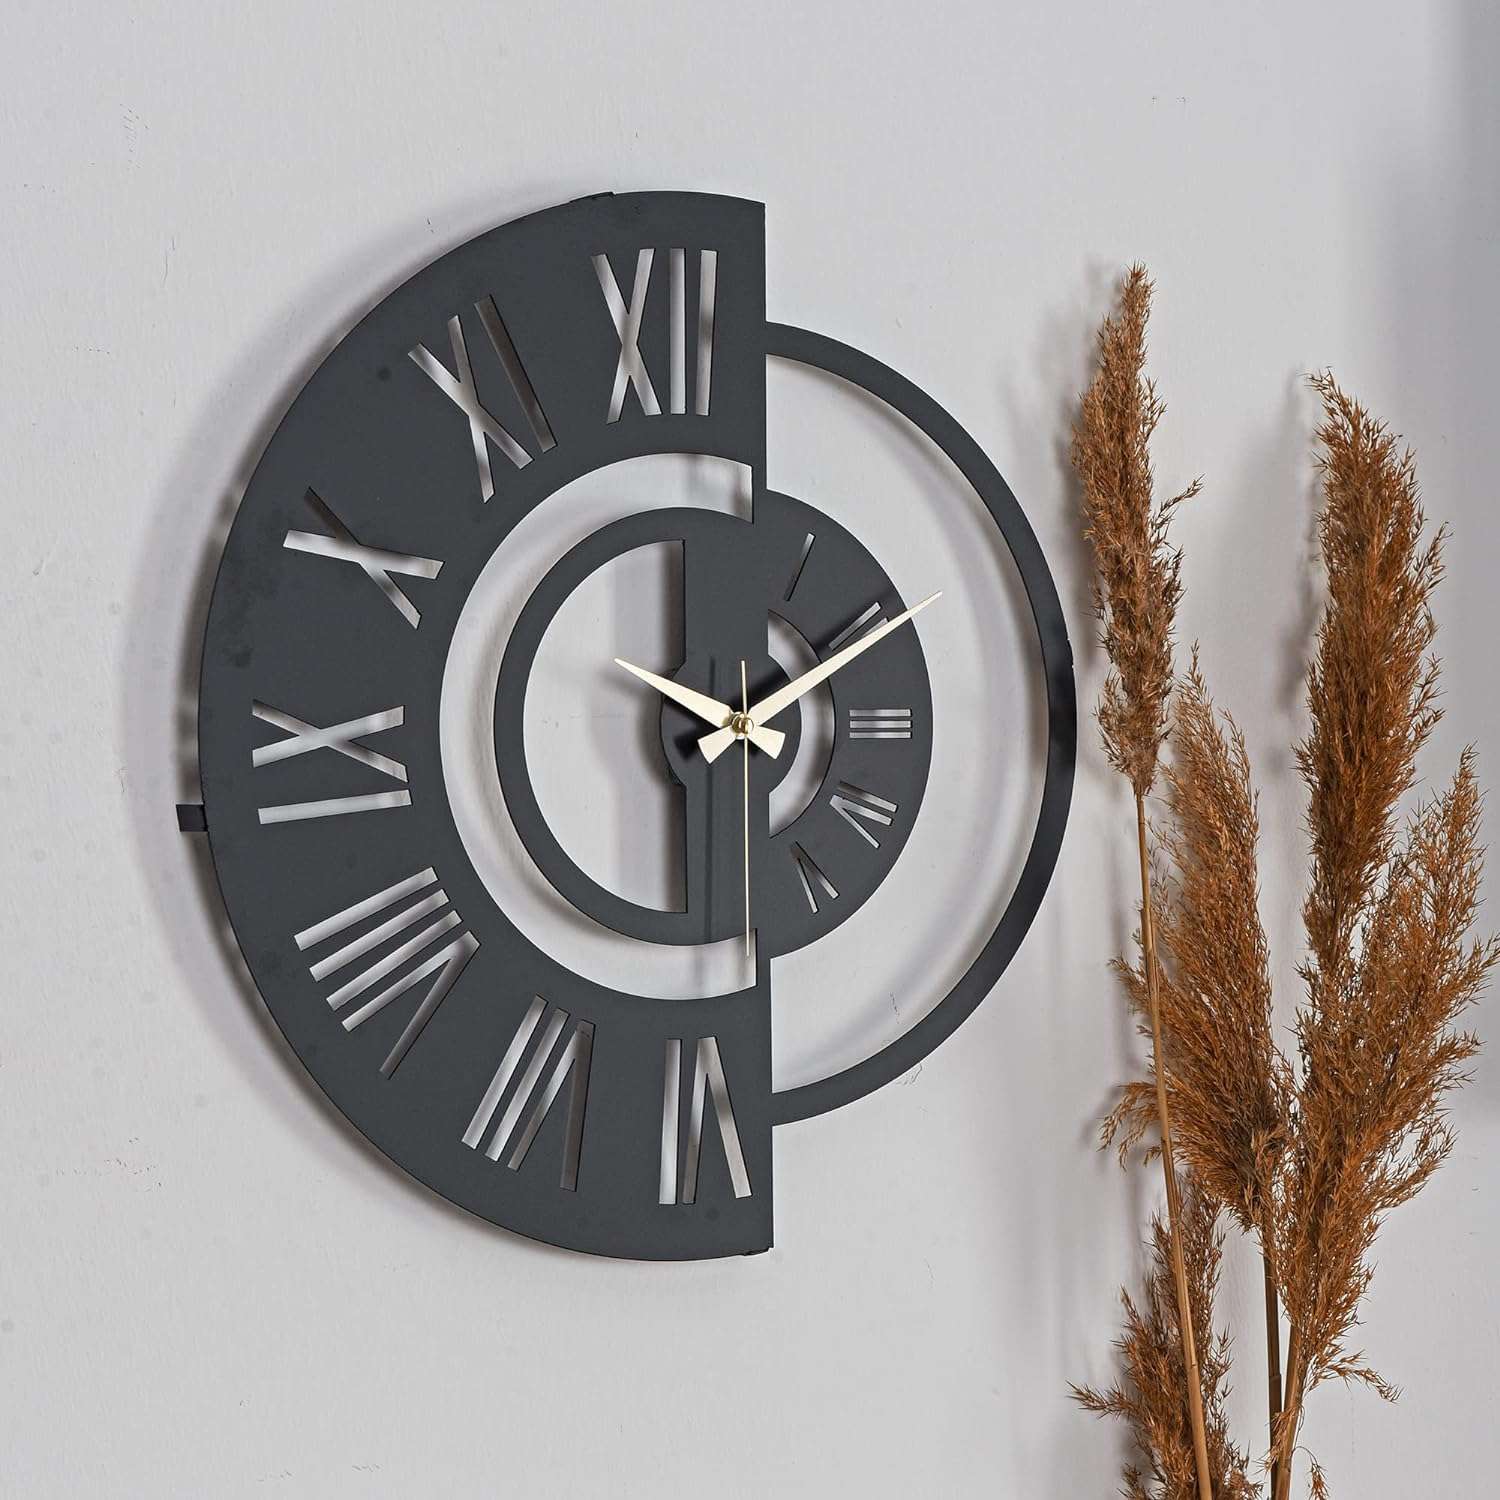 Designer Cutout Wall Clock Writings On The Wall Metal Wall Clock